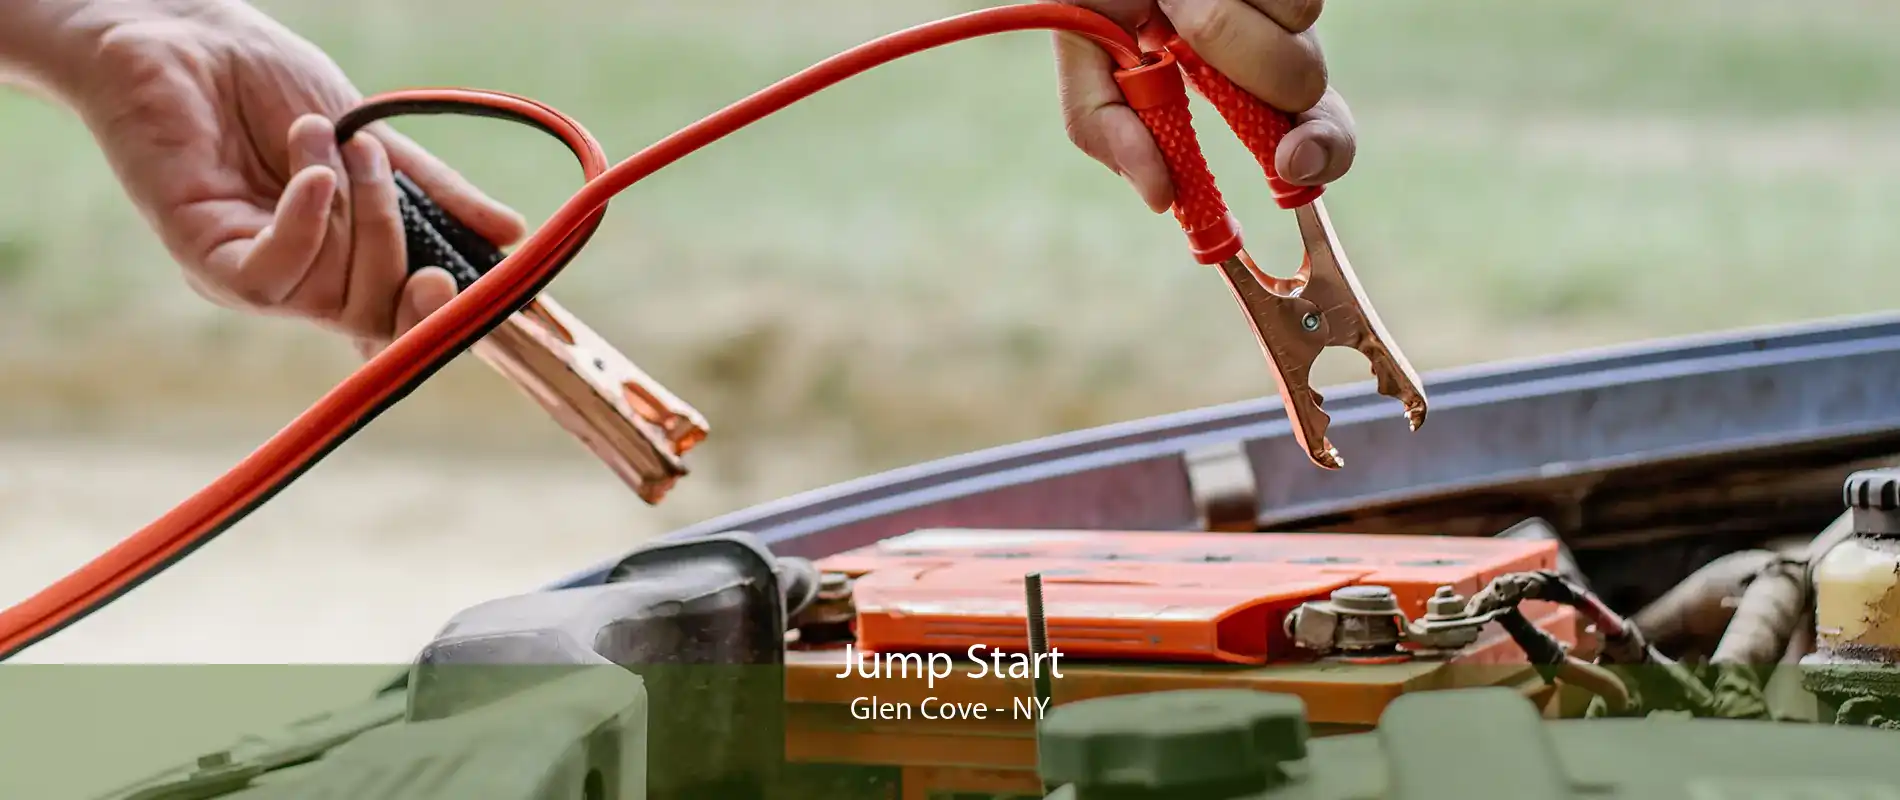 Jump Start Glen Cove - NY